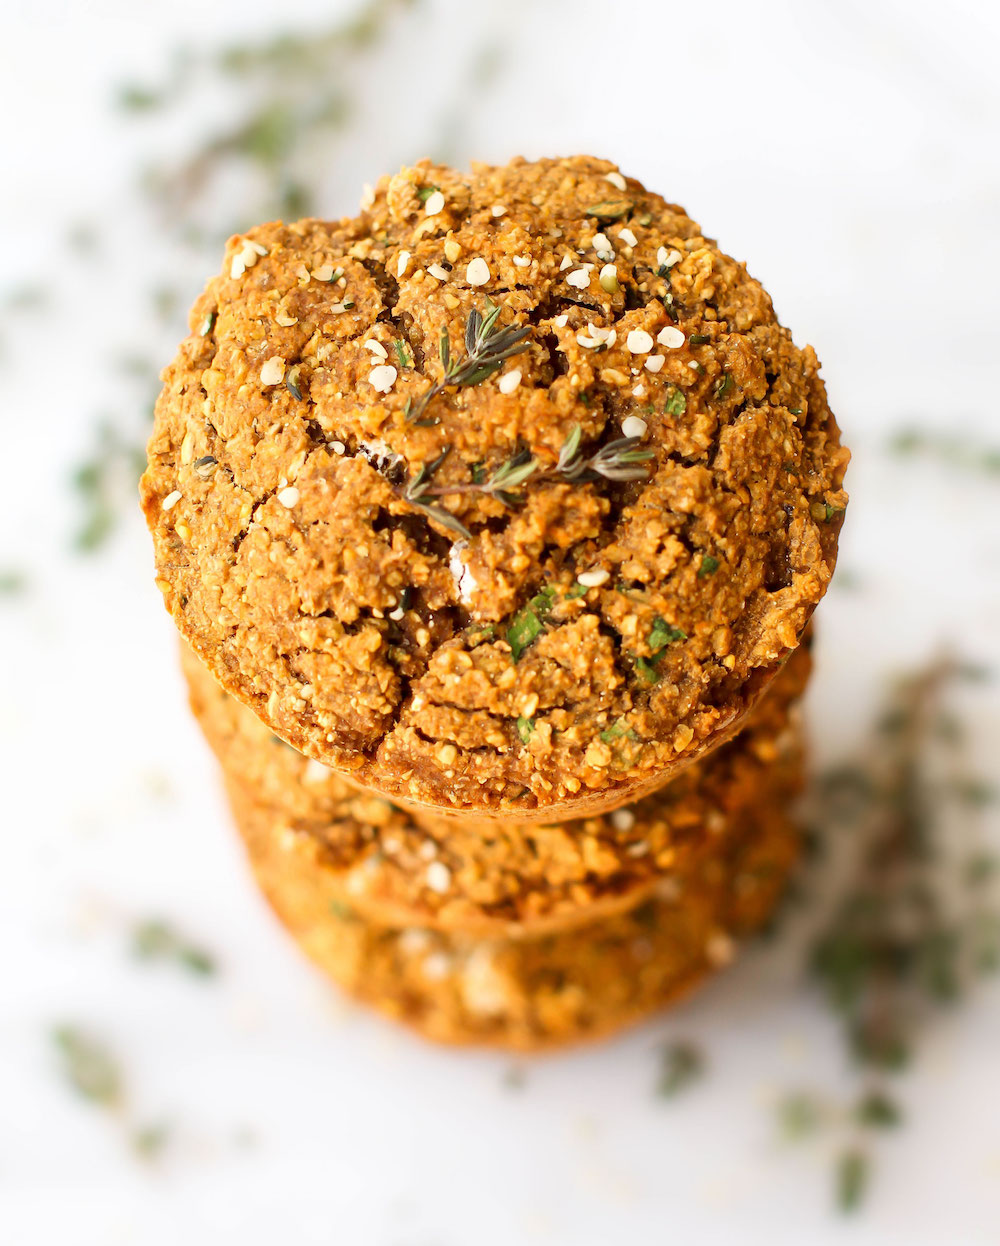 Sweet Potato & Herb Savory Muffins | Vegan, Gluten-Free, Oil-Free